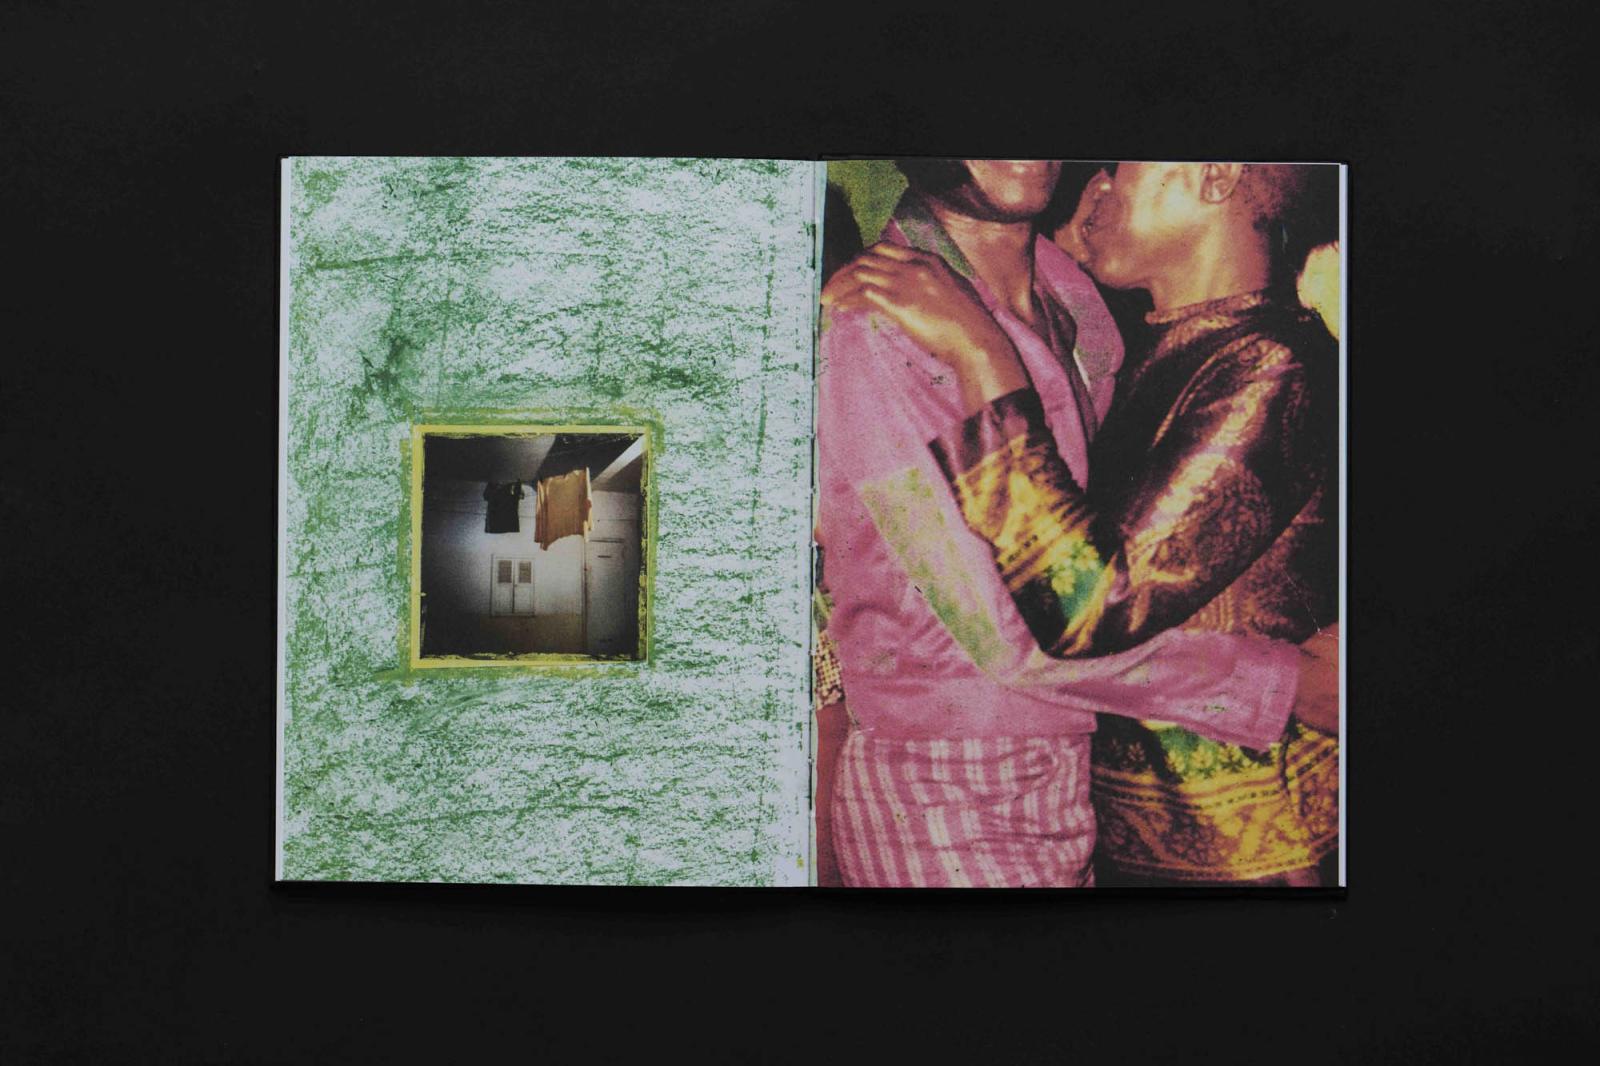 Just released: Ediciones Buen Lugar publishes new photobook PREDIO by Javier Álvarez. 